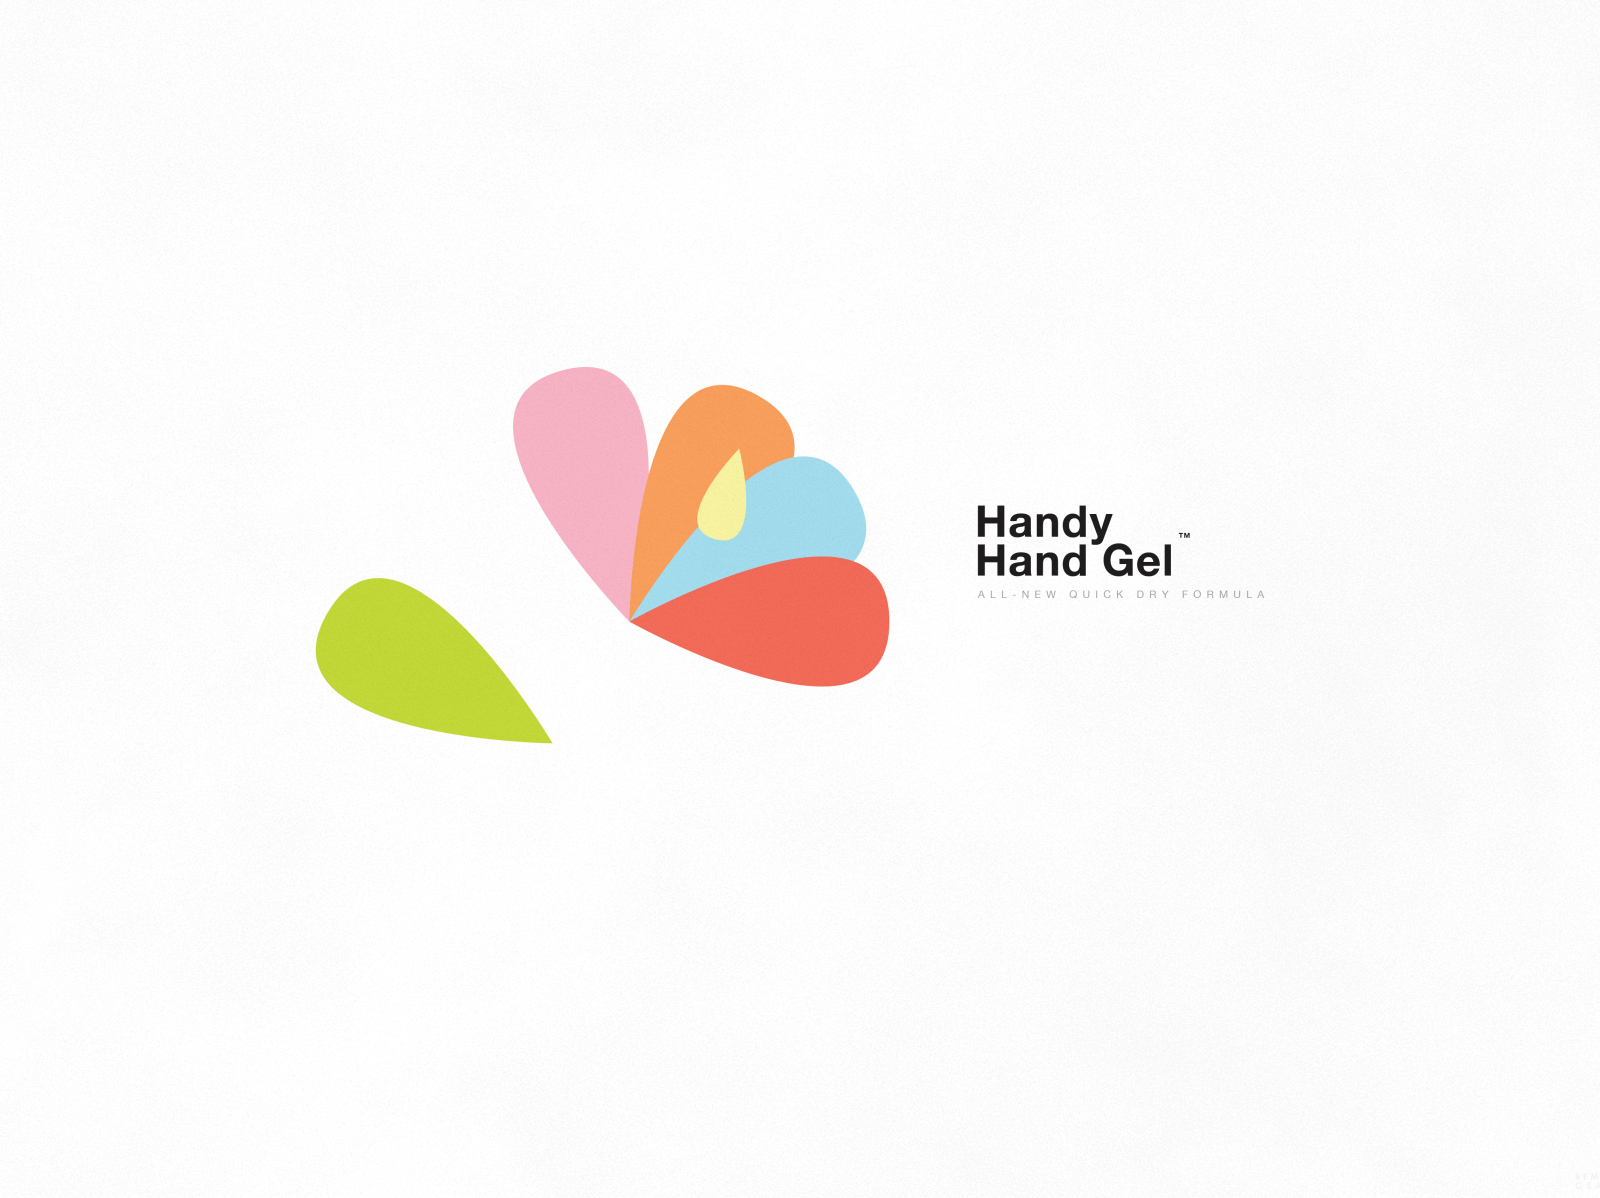 Handy Hand Gel Logo Design By Karl Bembridge On Dribbble